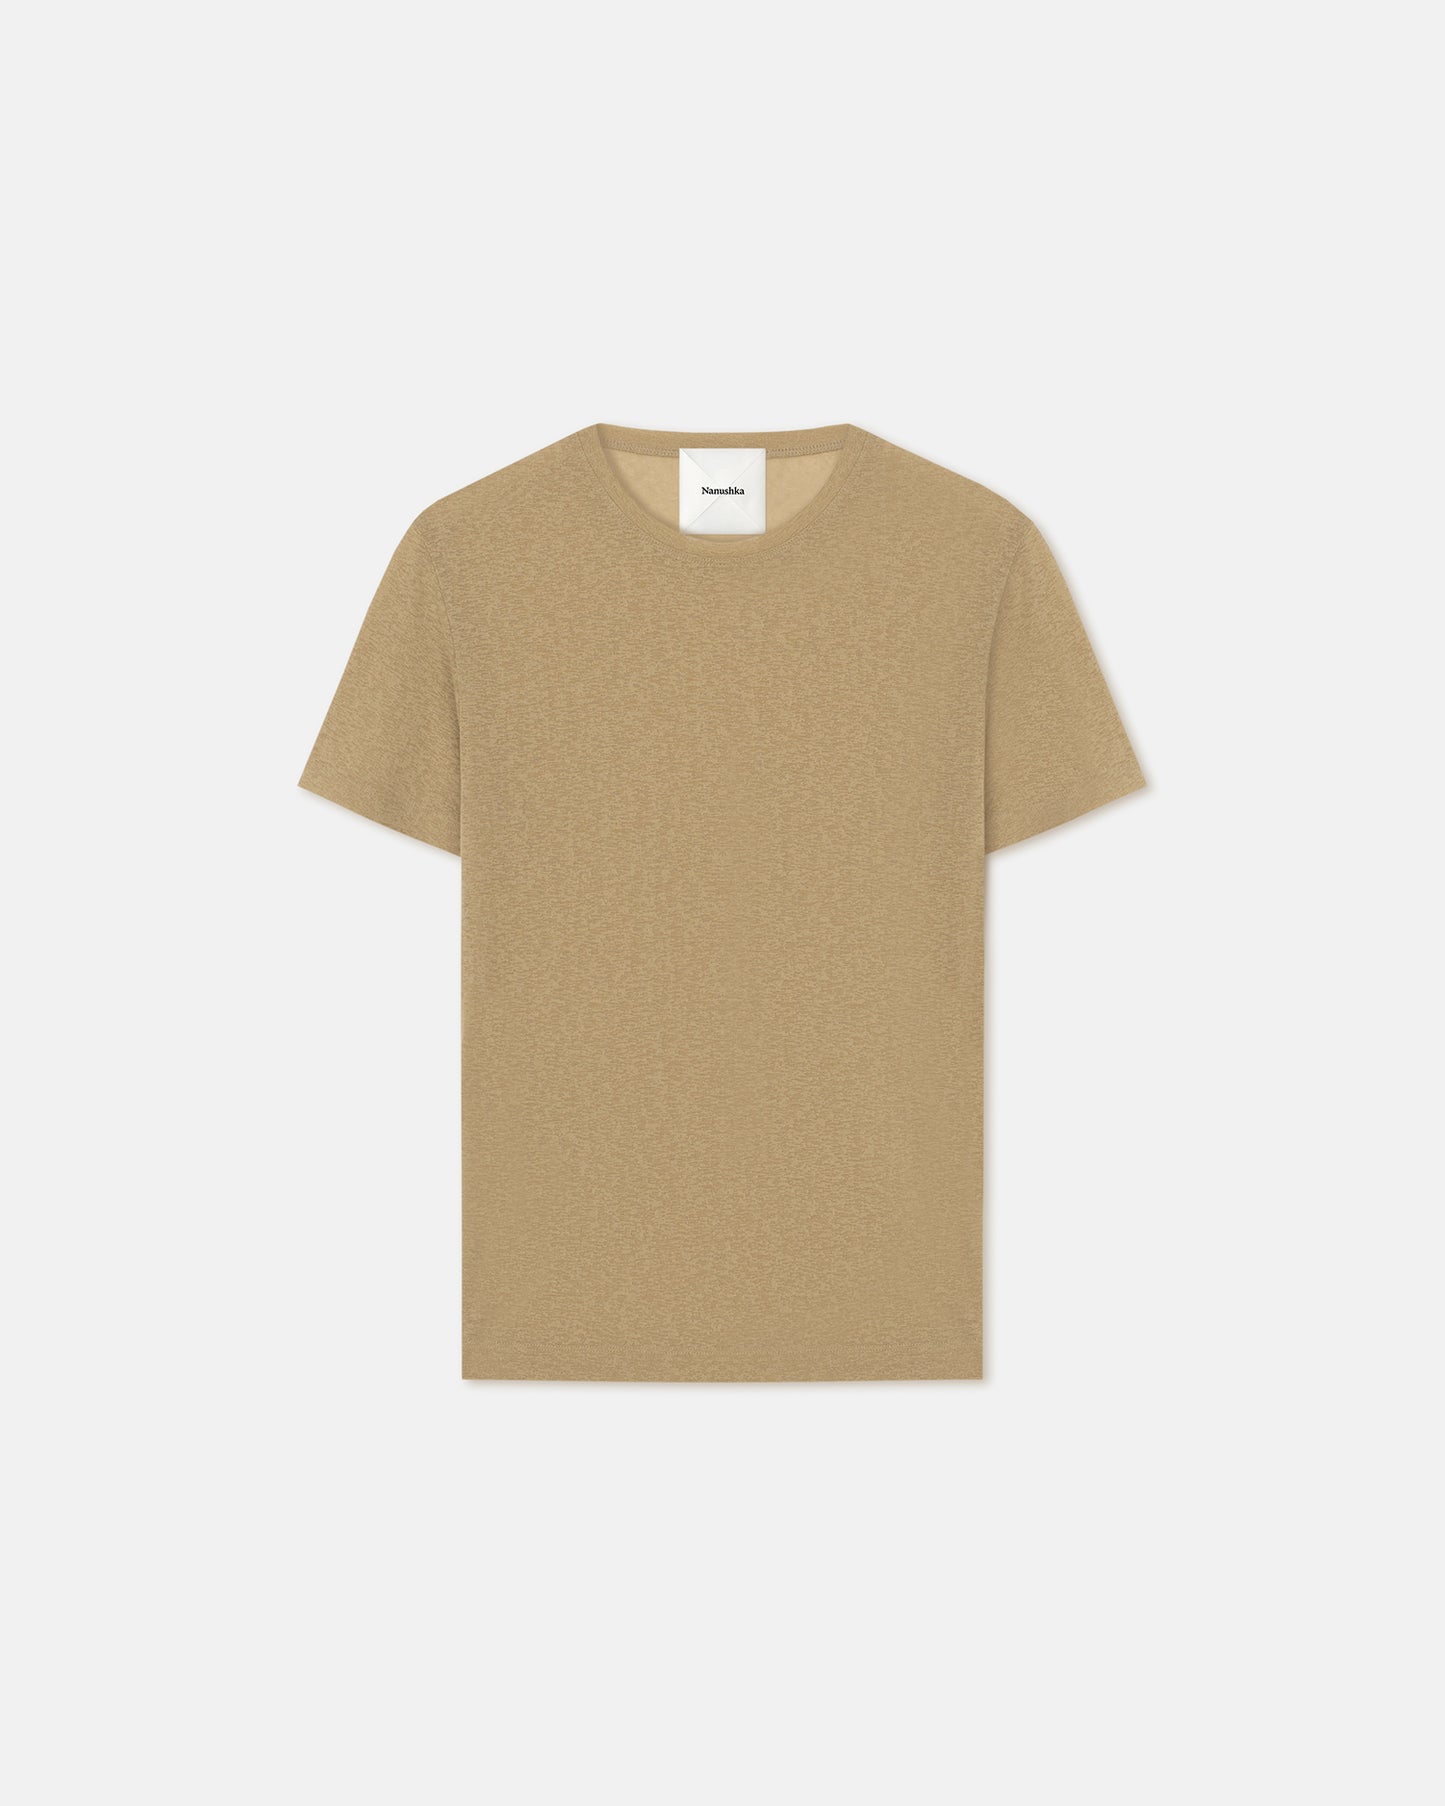 Jenno - Mesh-Jersey T-Shirt - Pale Olive